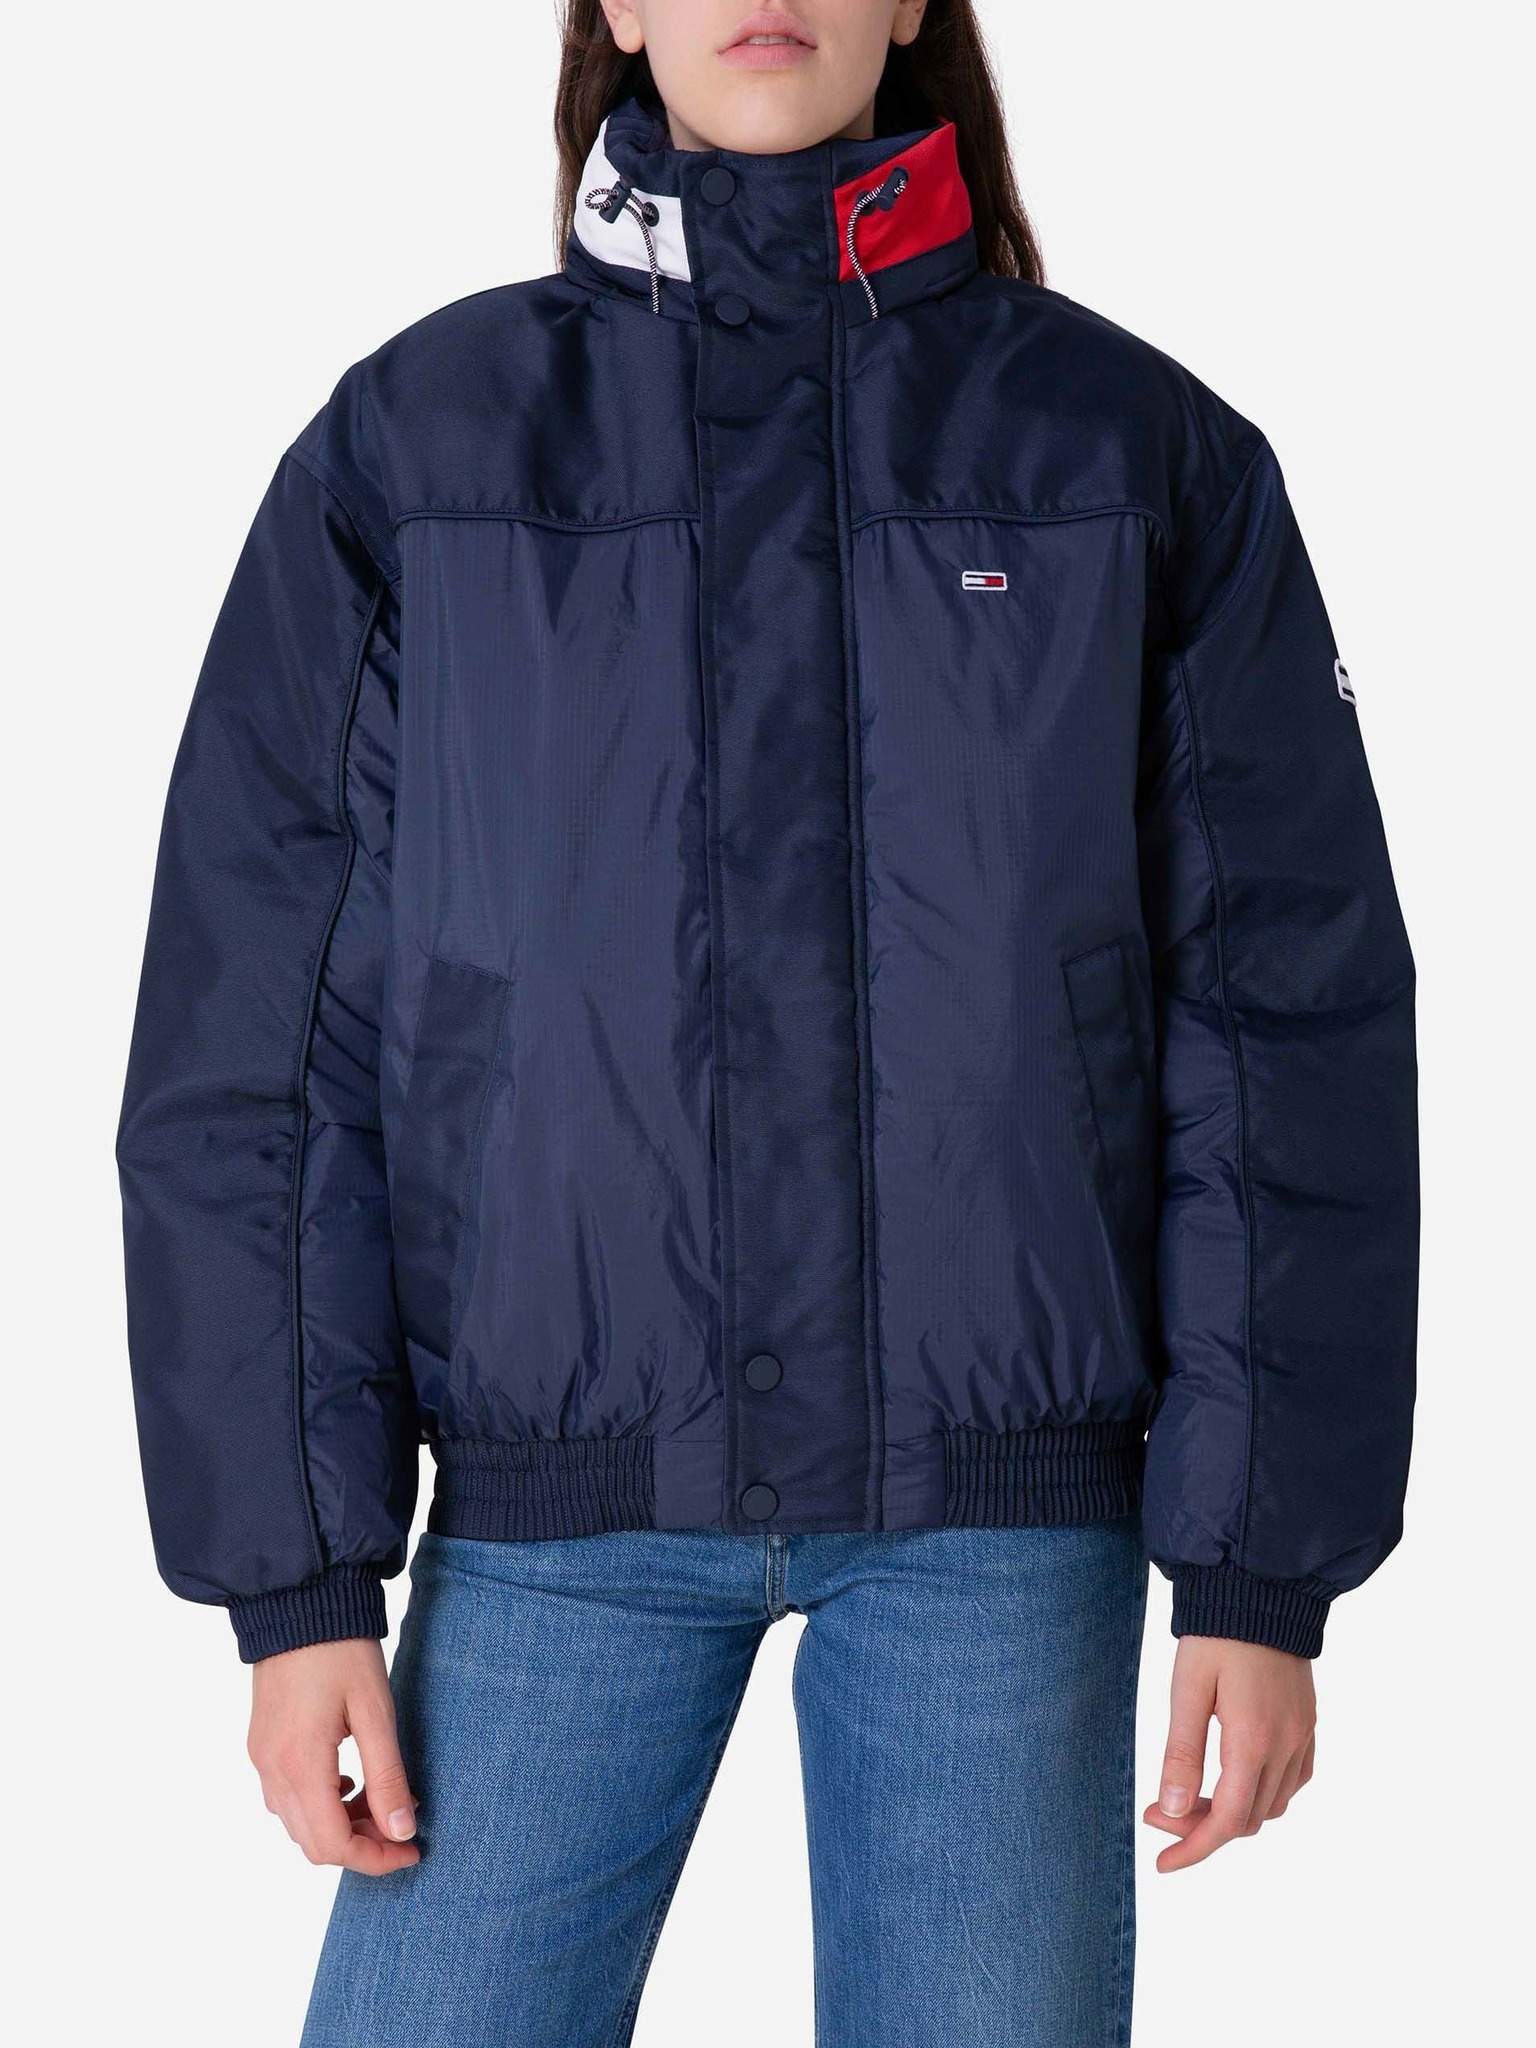 Tommy Hilfiger - Brand Winter jacket Bibloo.com